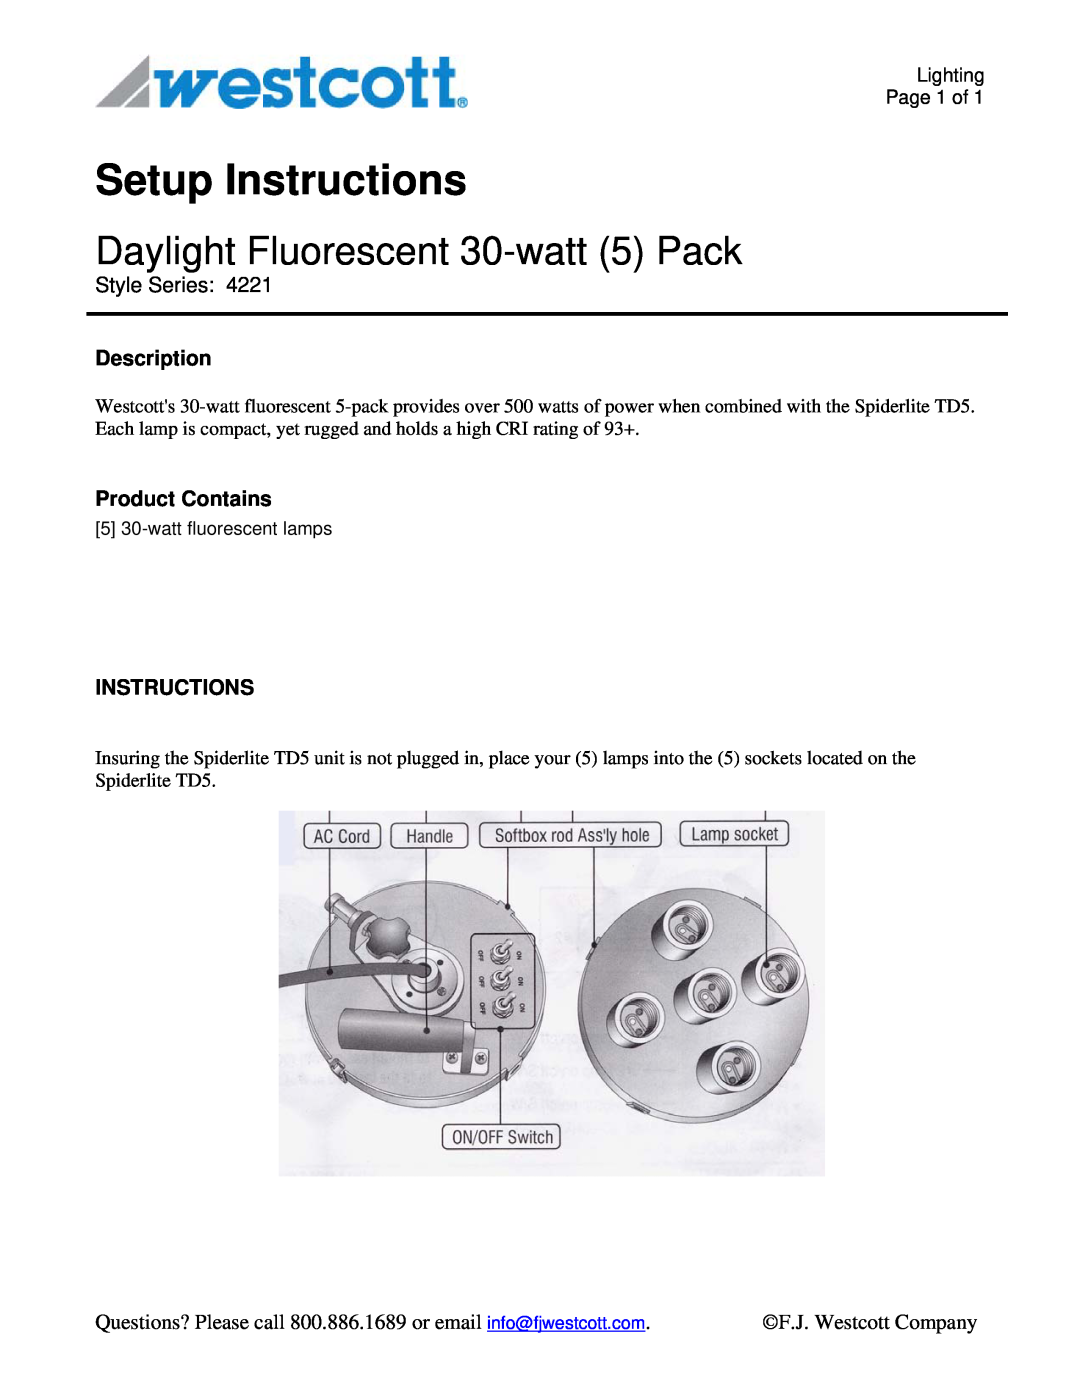 Westcott 4221 manual Setup Instructions, Daylight Fluorescent 30-watt 5 Pack, Style Series, Description, Product Contains 